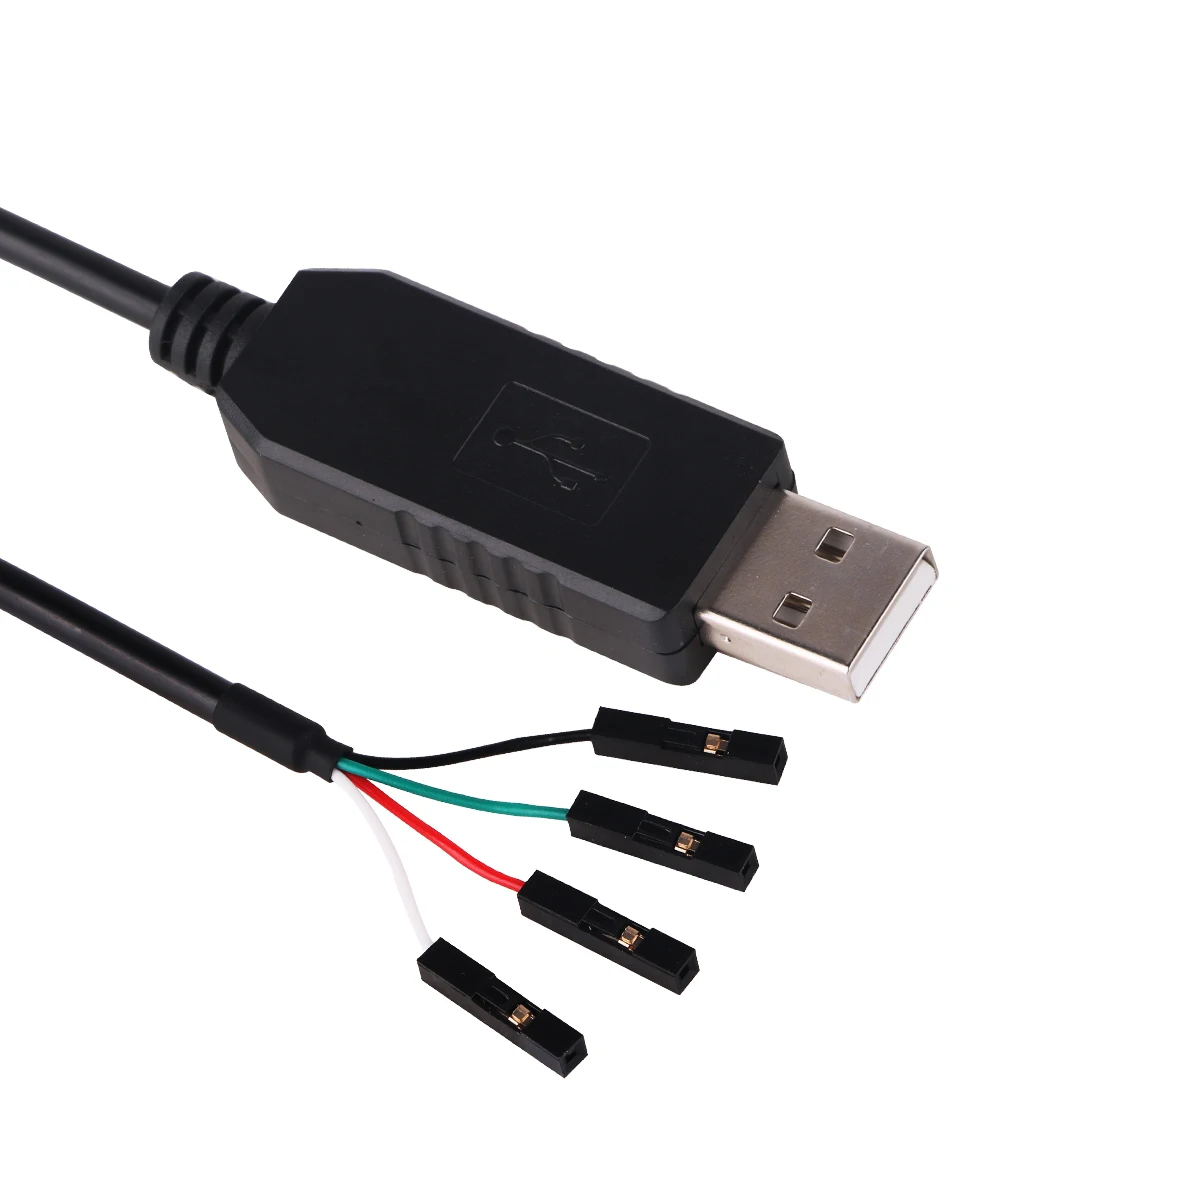 FTDI TTL-232R TTL TO USB 4-Way SIL,0.1” 2.54mm Pitch 4 Pin Terminal Block Adapter Connector Serial Converter Cable rcmall 5pcs ft232rl ftdi mini usb to ttl serial converter adapter module 3 3v 5 5v adapter board for arduino usb cable